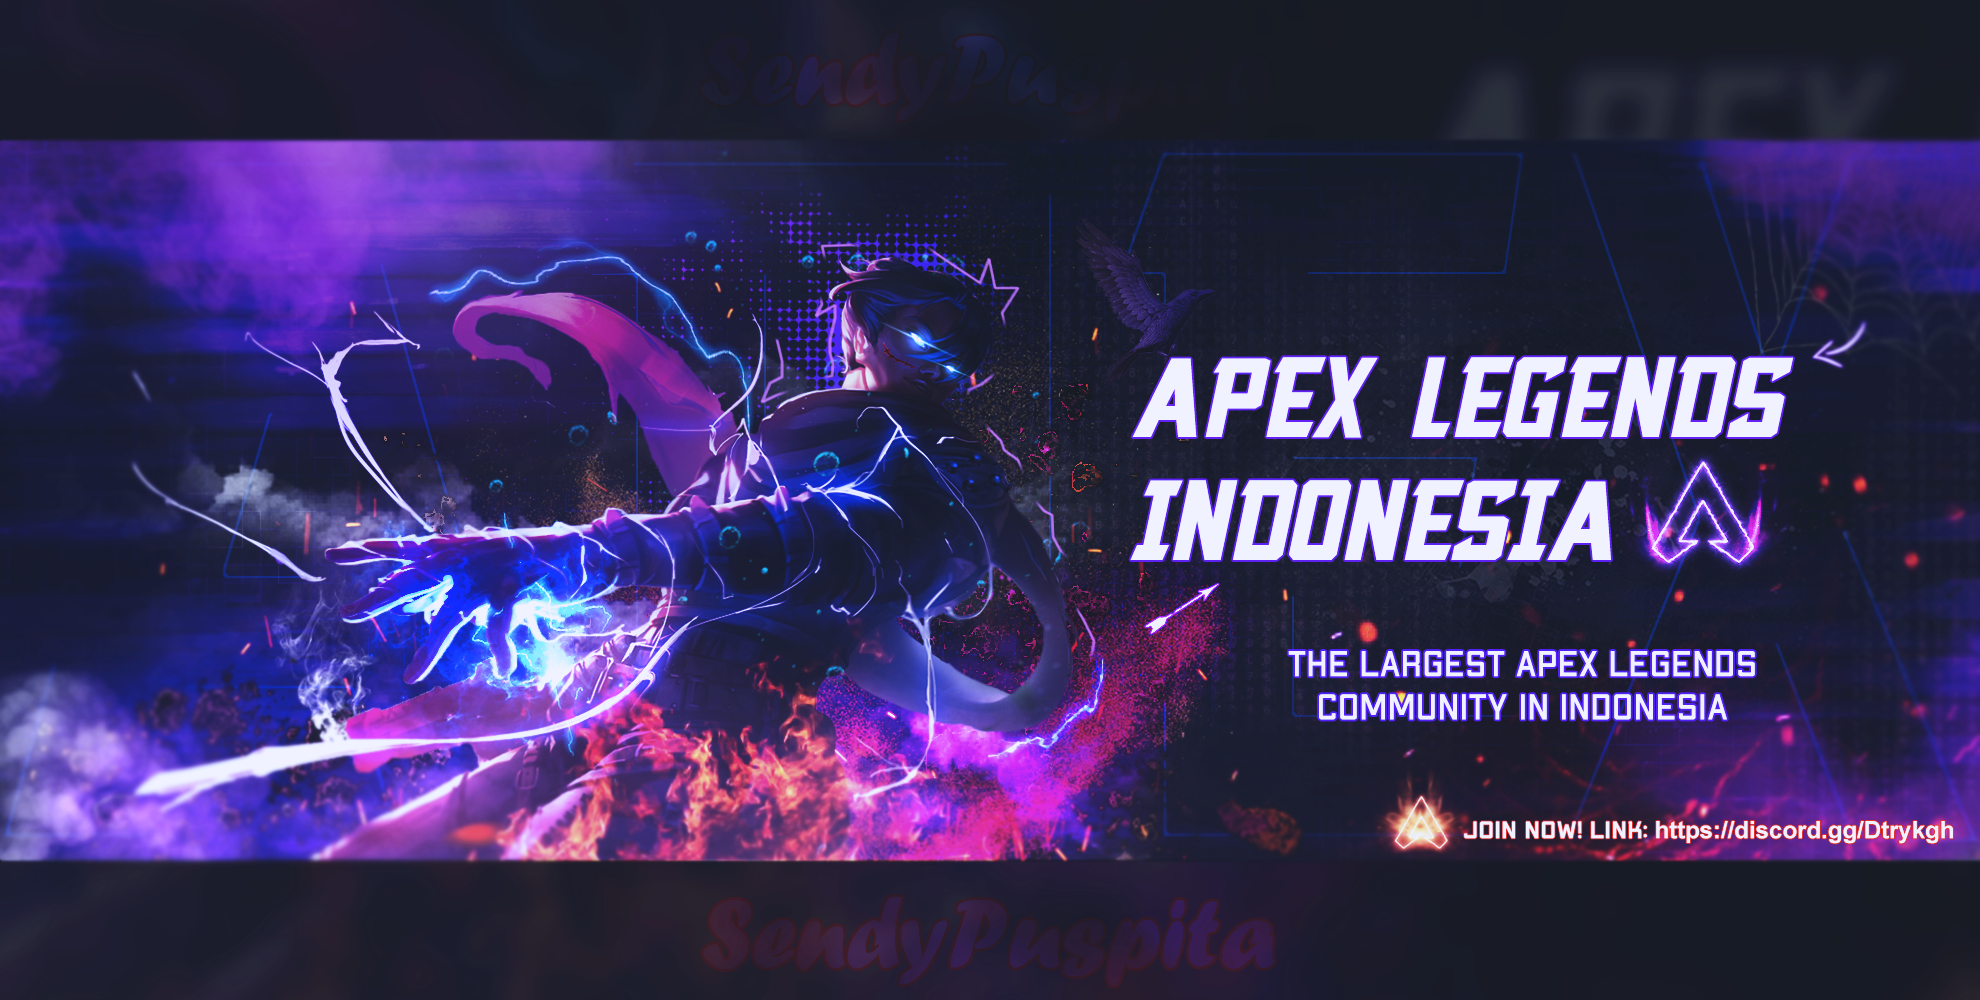 Banner Invite Apex Legends Indonesia By Sendypuspitaa On Deviantart